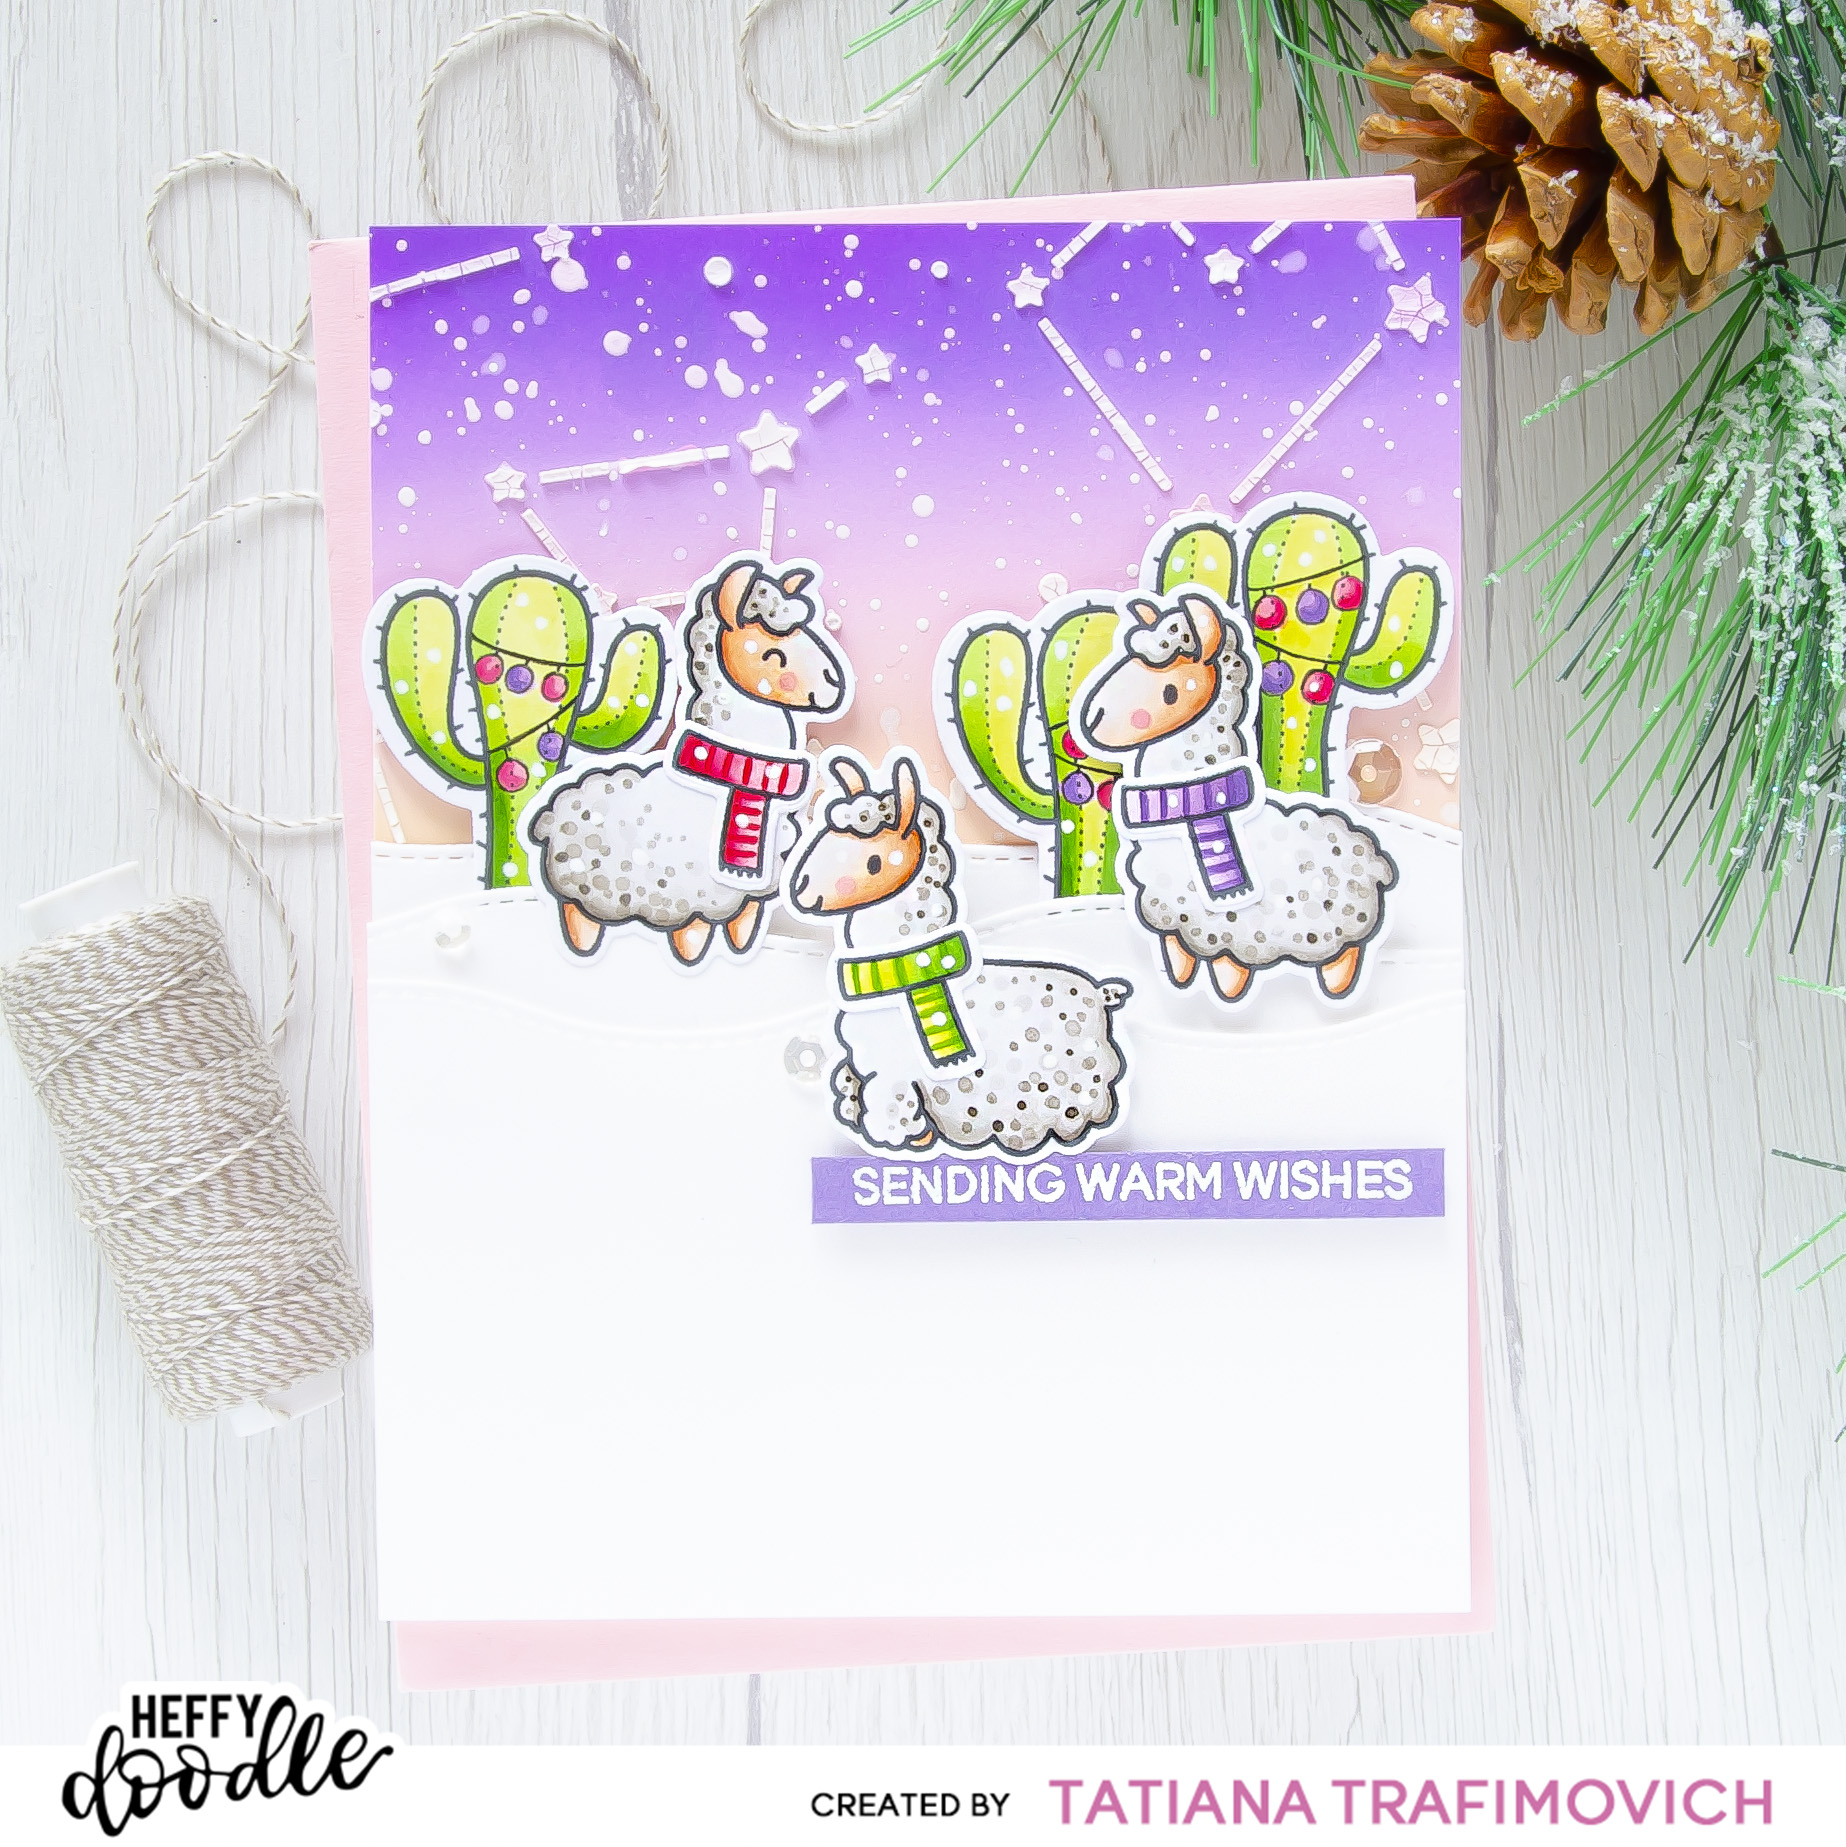 Sending Warm Wishes #handmade card by Tatiana Trafimovich #tatianacraftandart - Llamazing Llamas Stamp Set by Heffy Doodle #heffydoodle